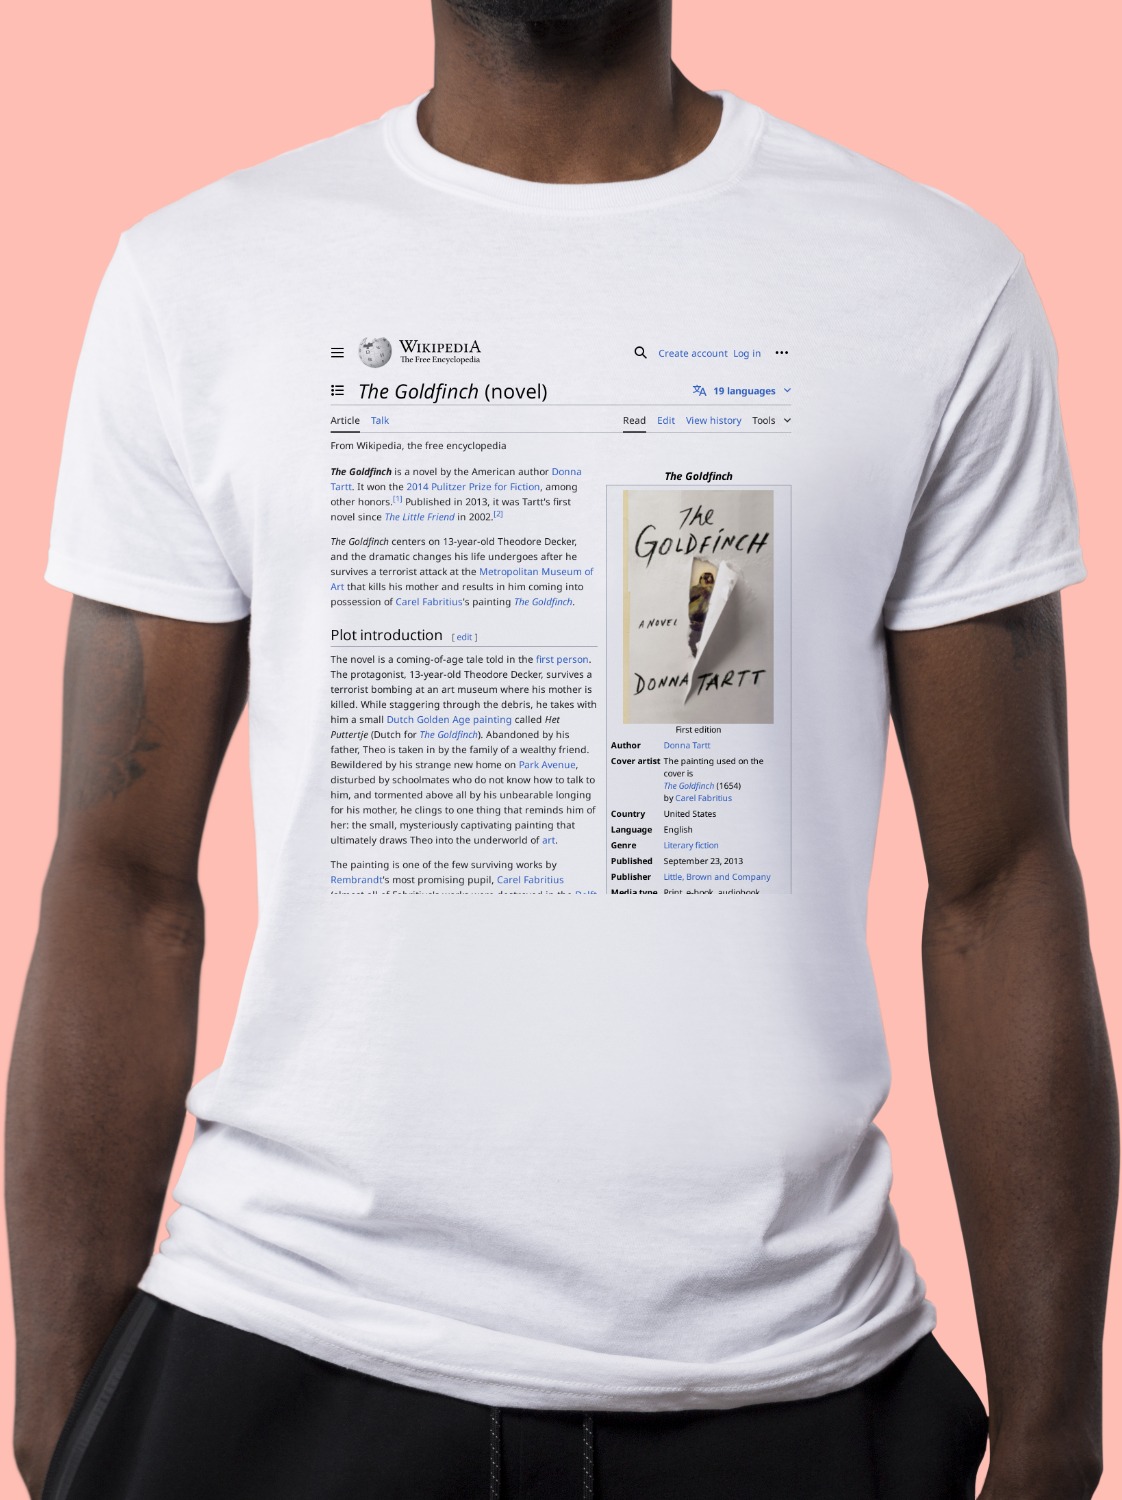 The_Goldfinch_(novel) Wikipedia Shirt